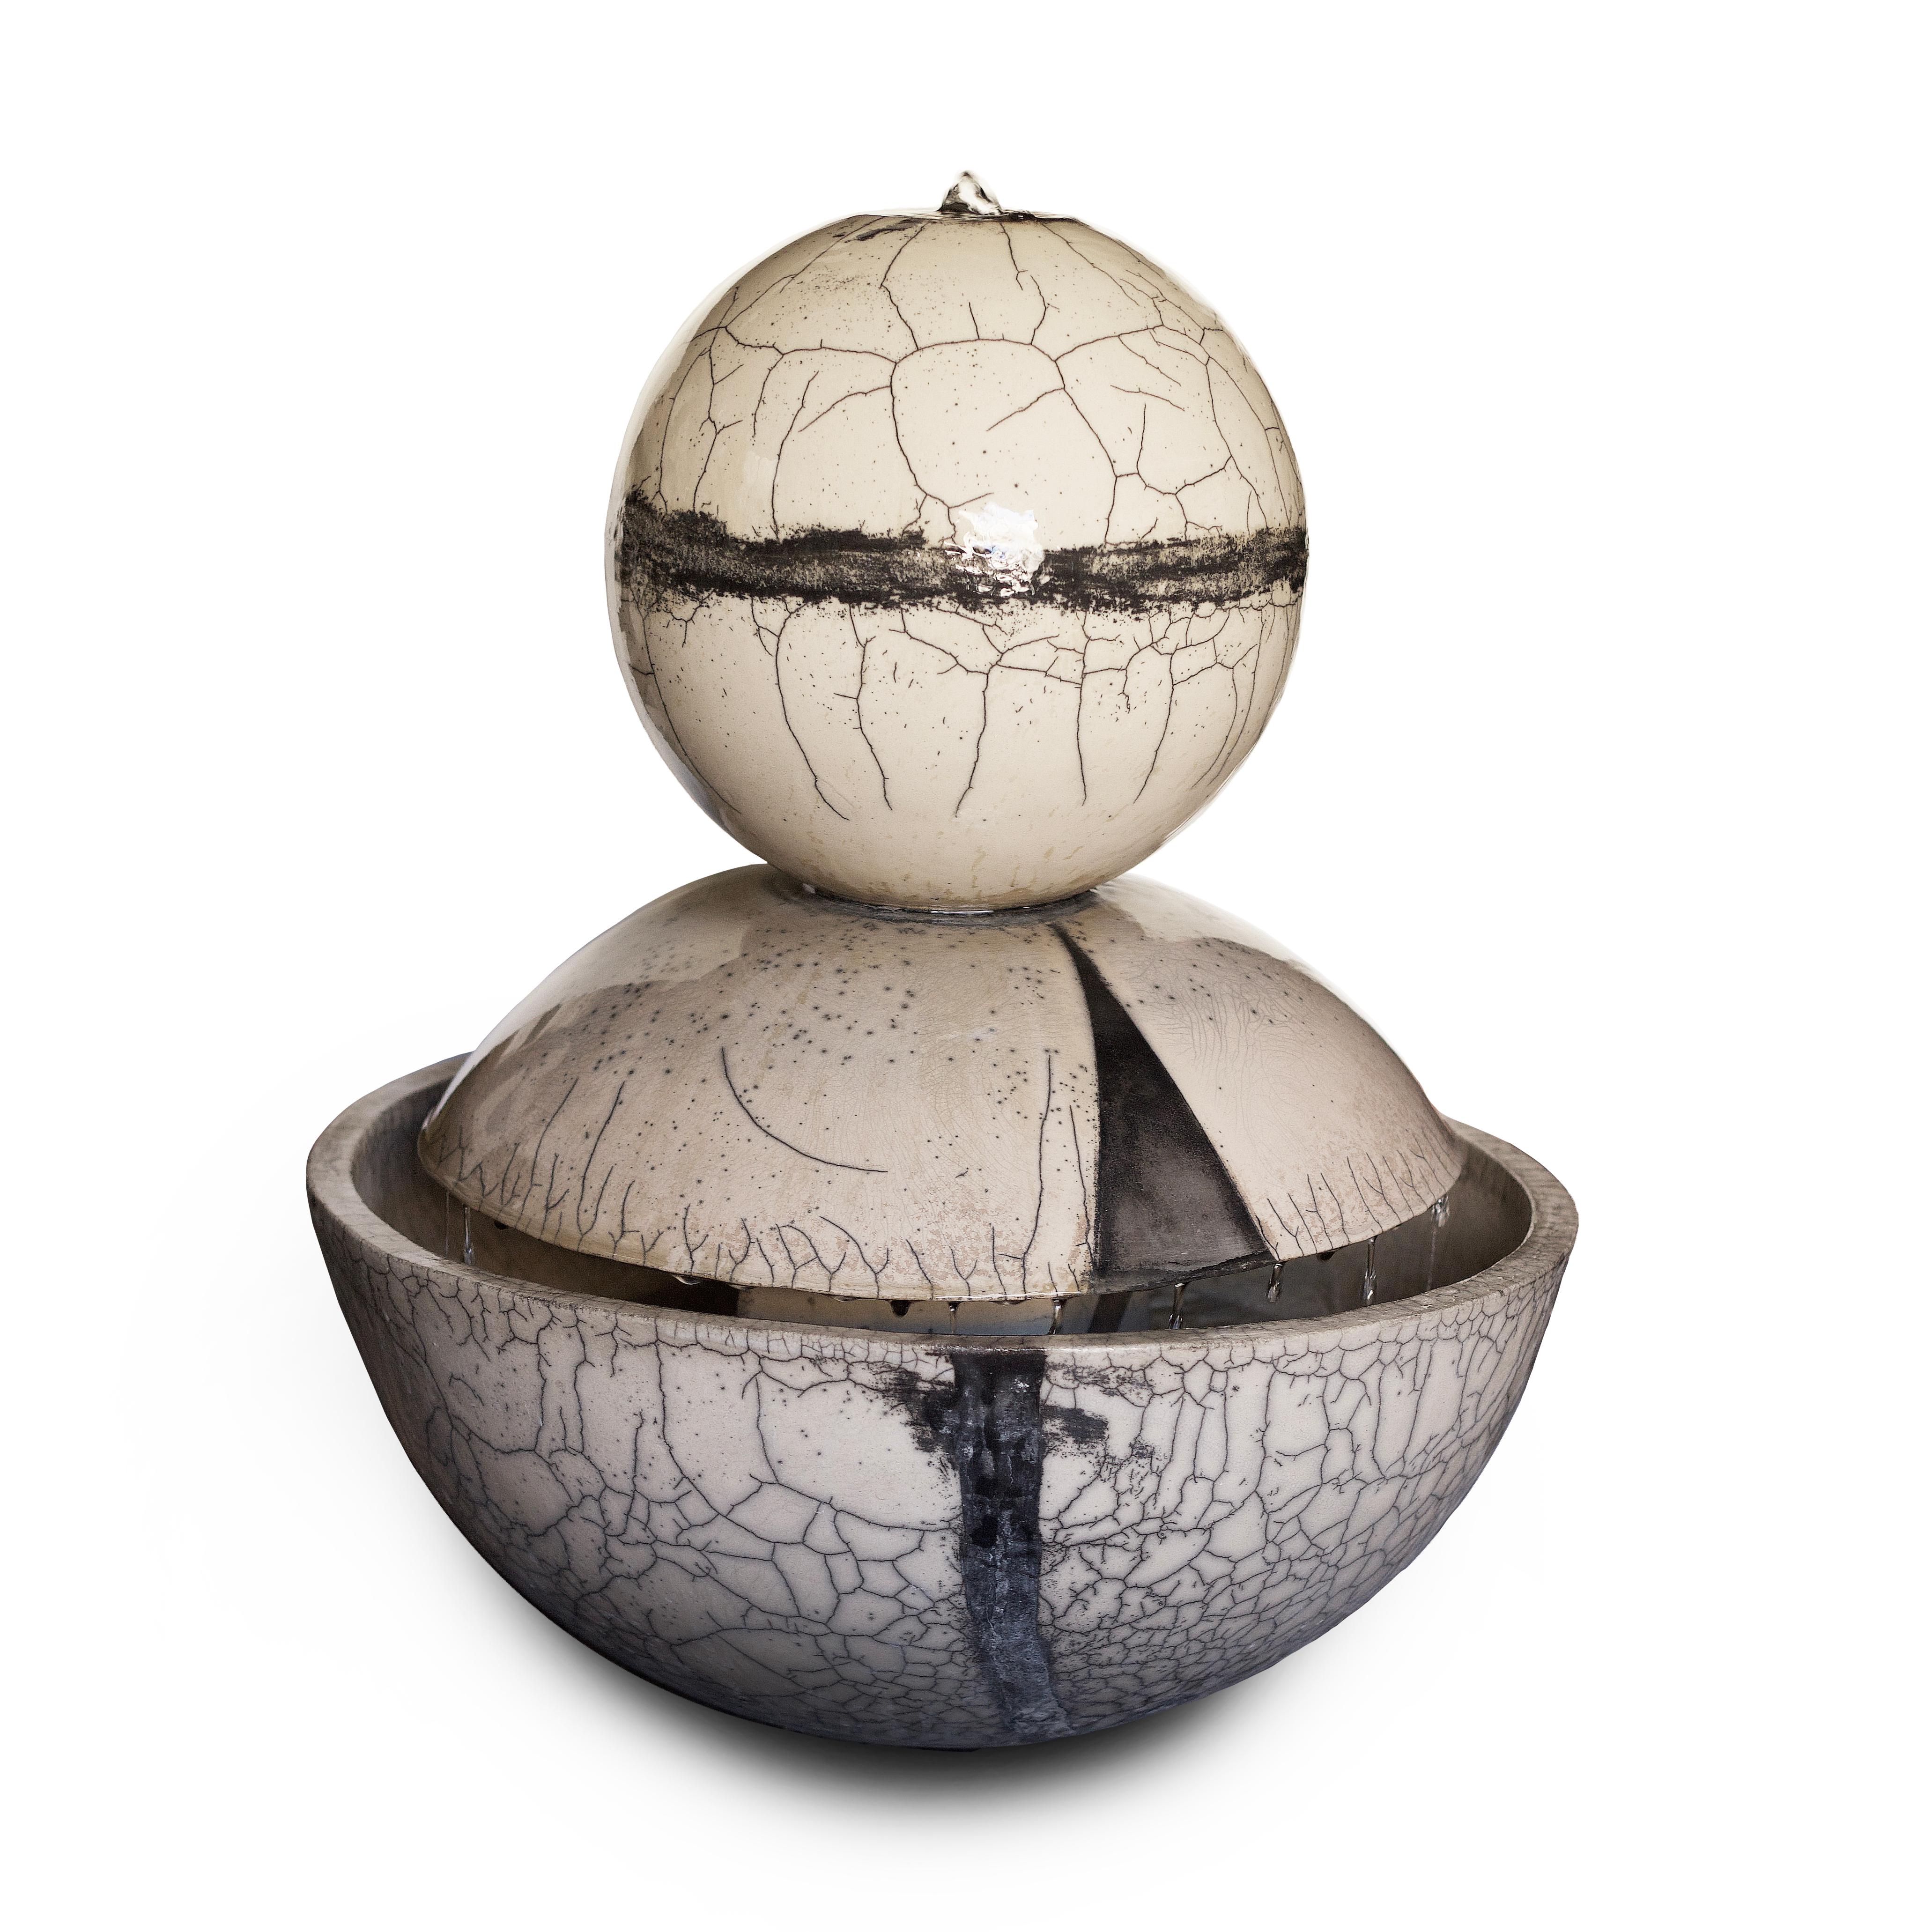 Modern Genesi Globe Ceramic Fountain Black White Crackle In Excellent Condition For Sale In monza, Monza and Brianza